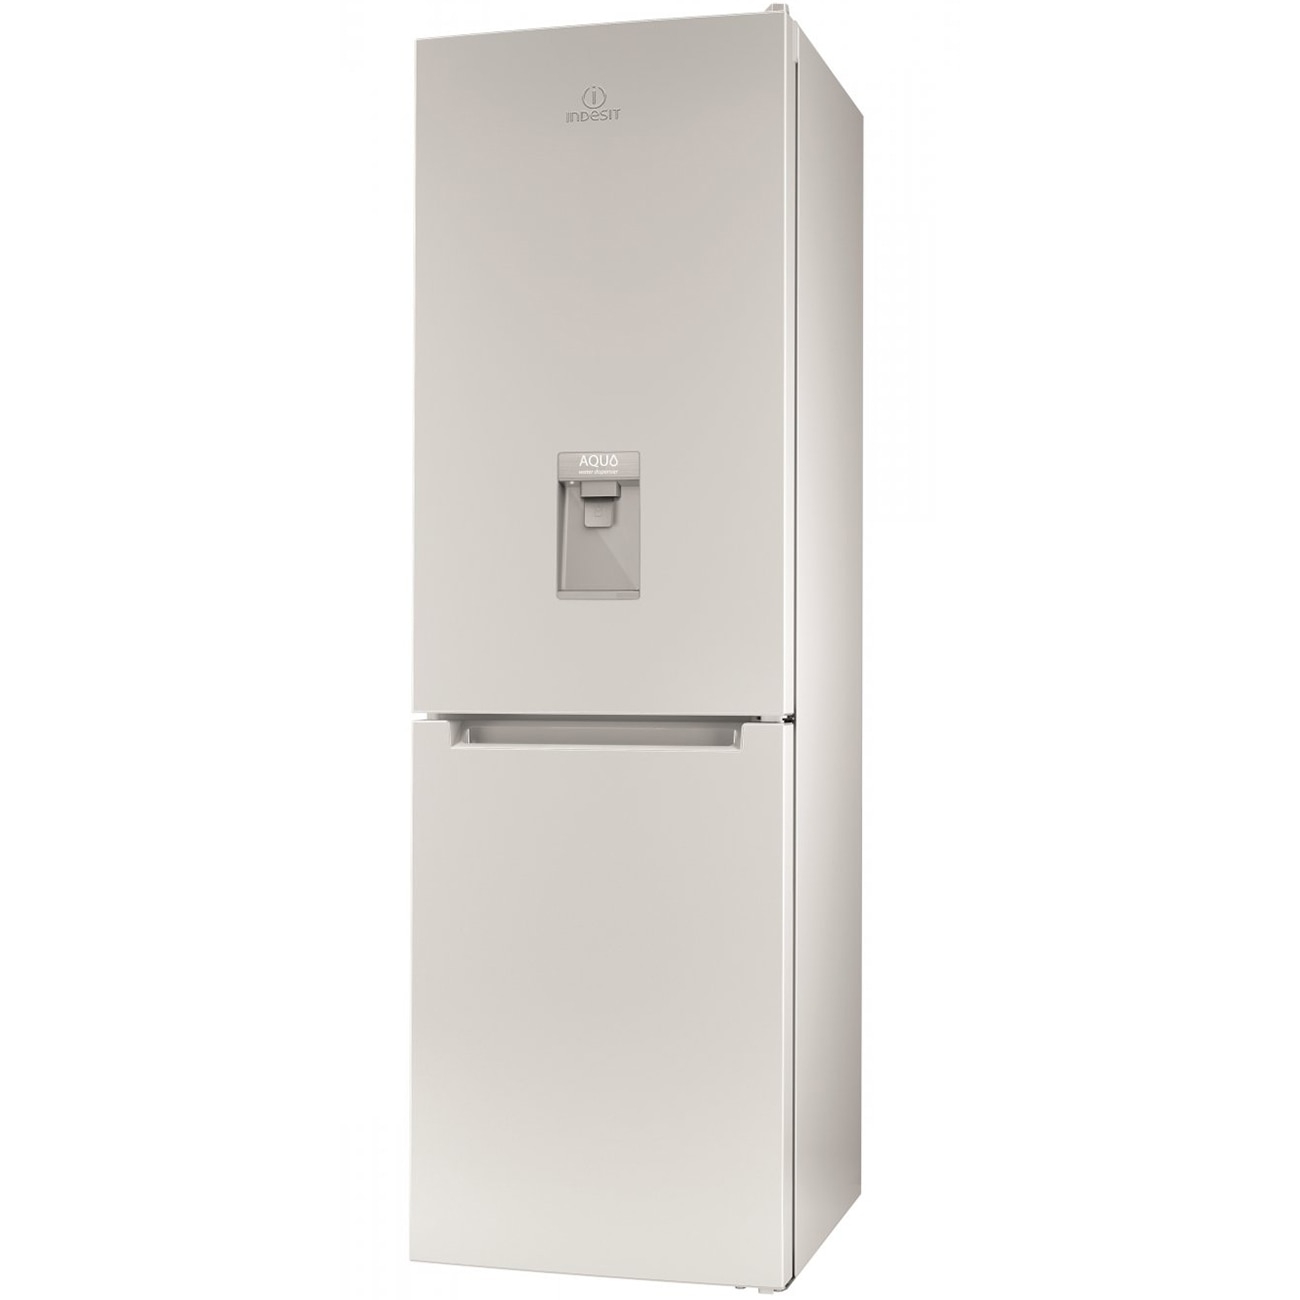 Хладилник Indesit LR8 S1 W AQ с обем от 335 л.